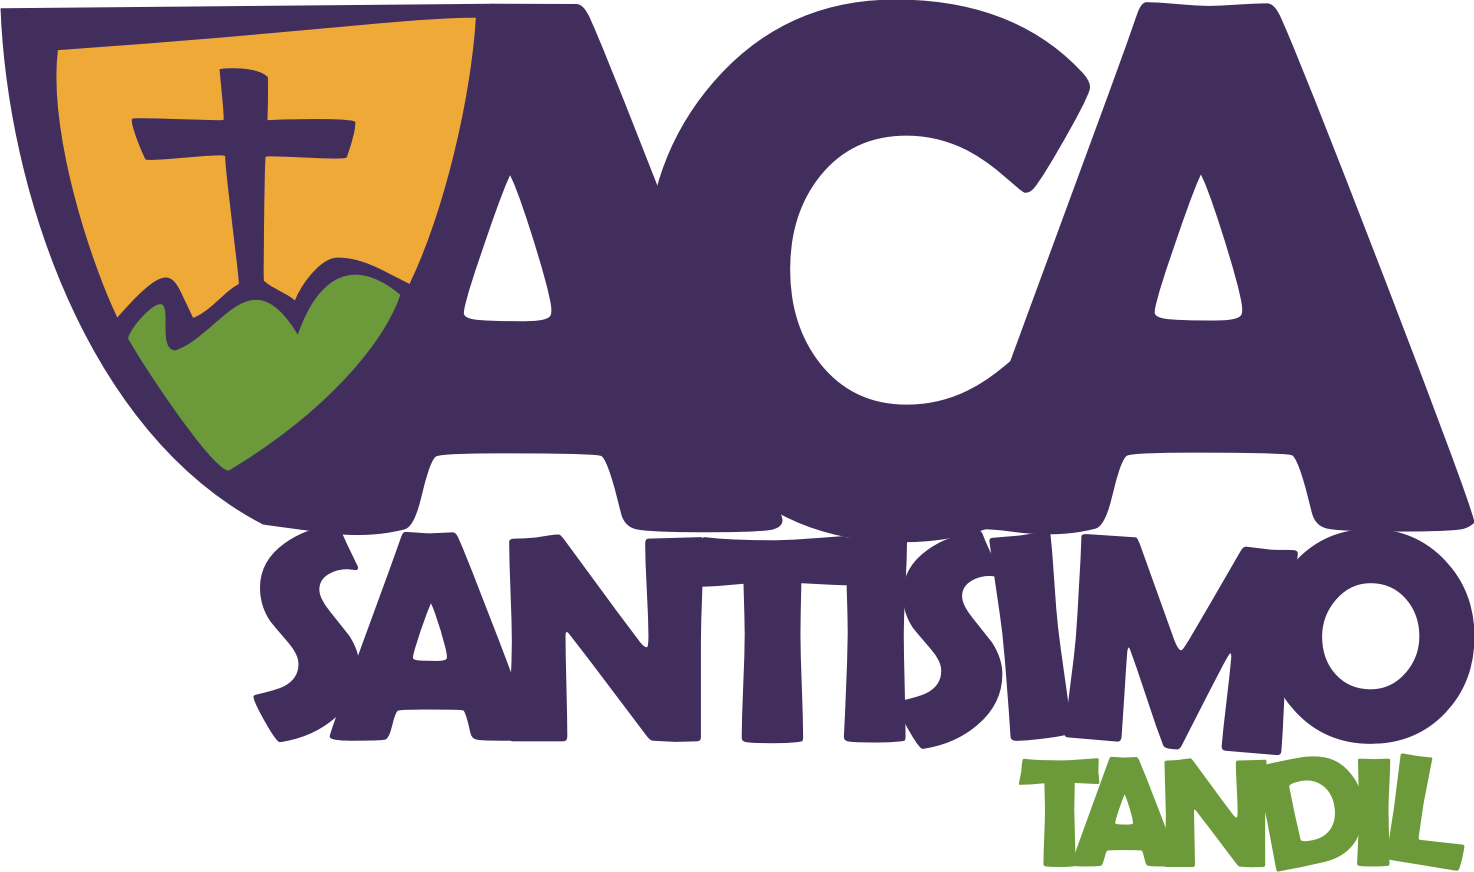 Acción Católica Argentina Tandil - Logo